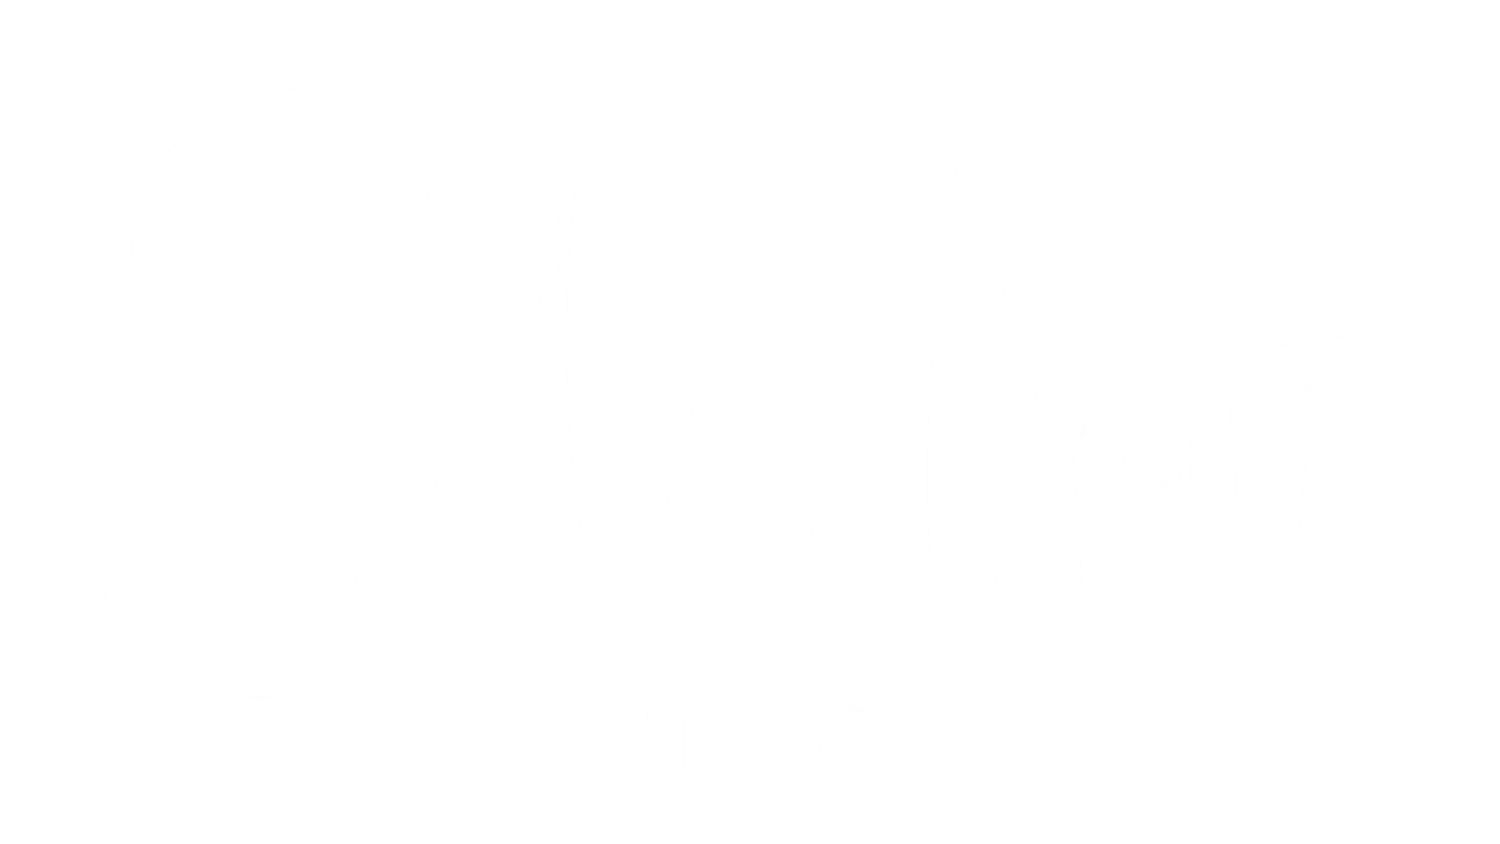 Set Apart Photography